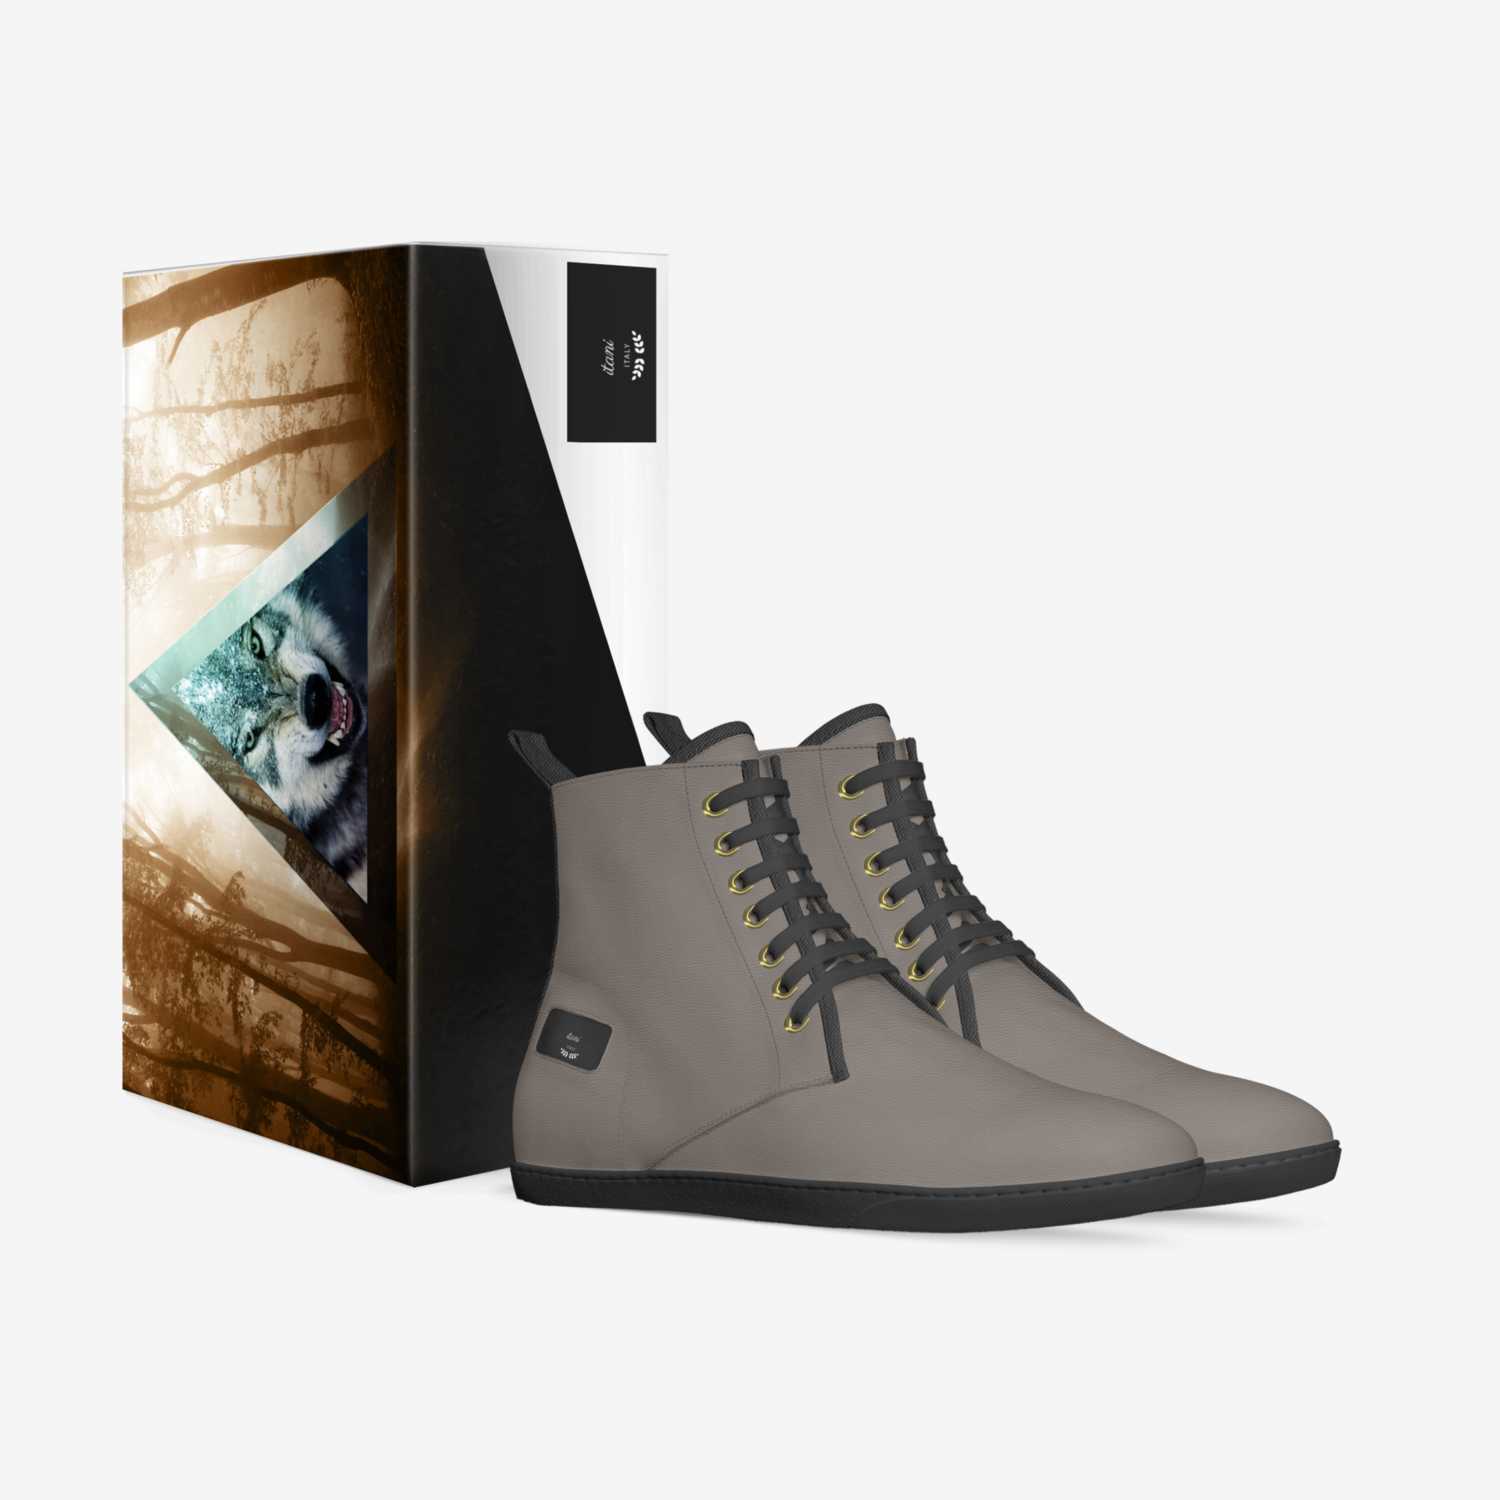 itani  custom made in Italy shoes by Amanda J. Itani | Box view